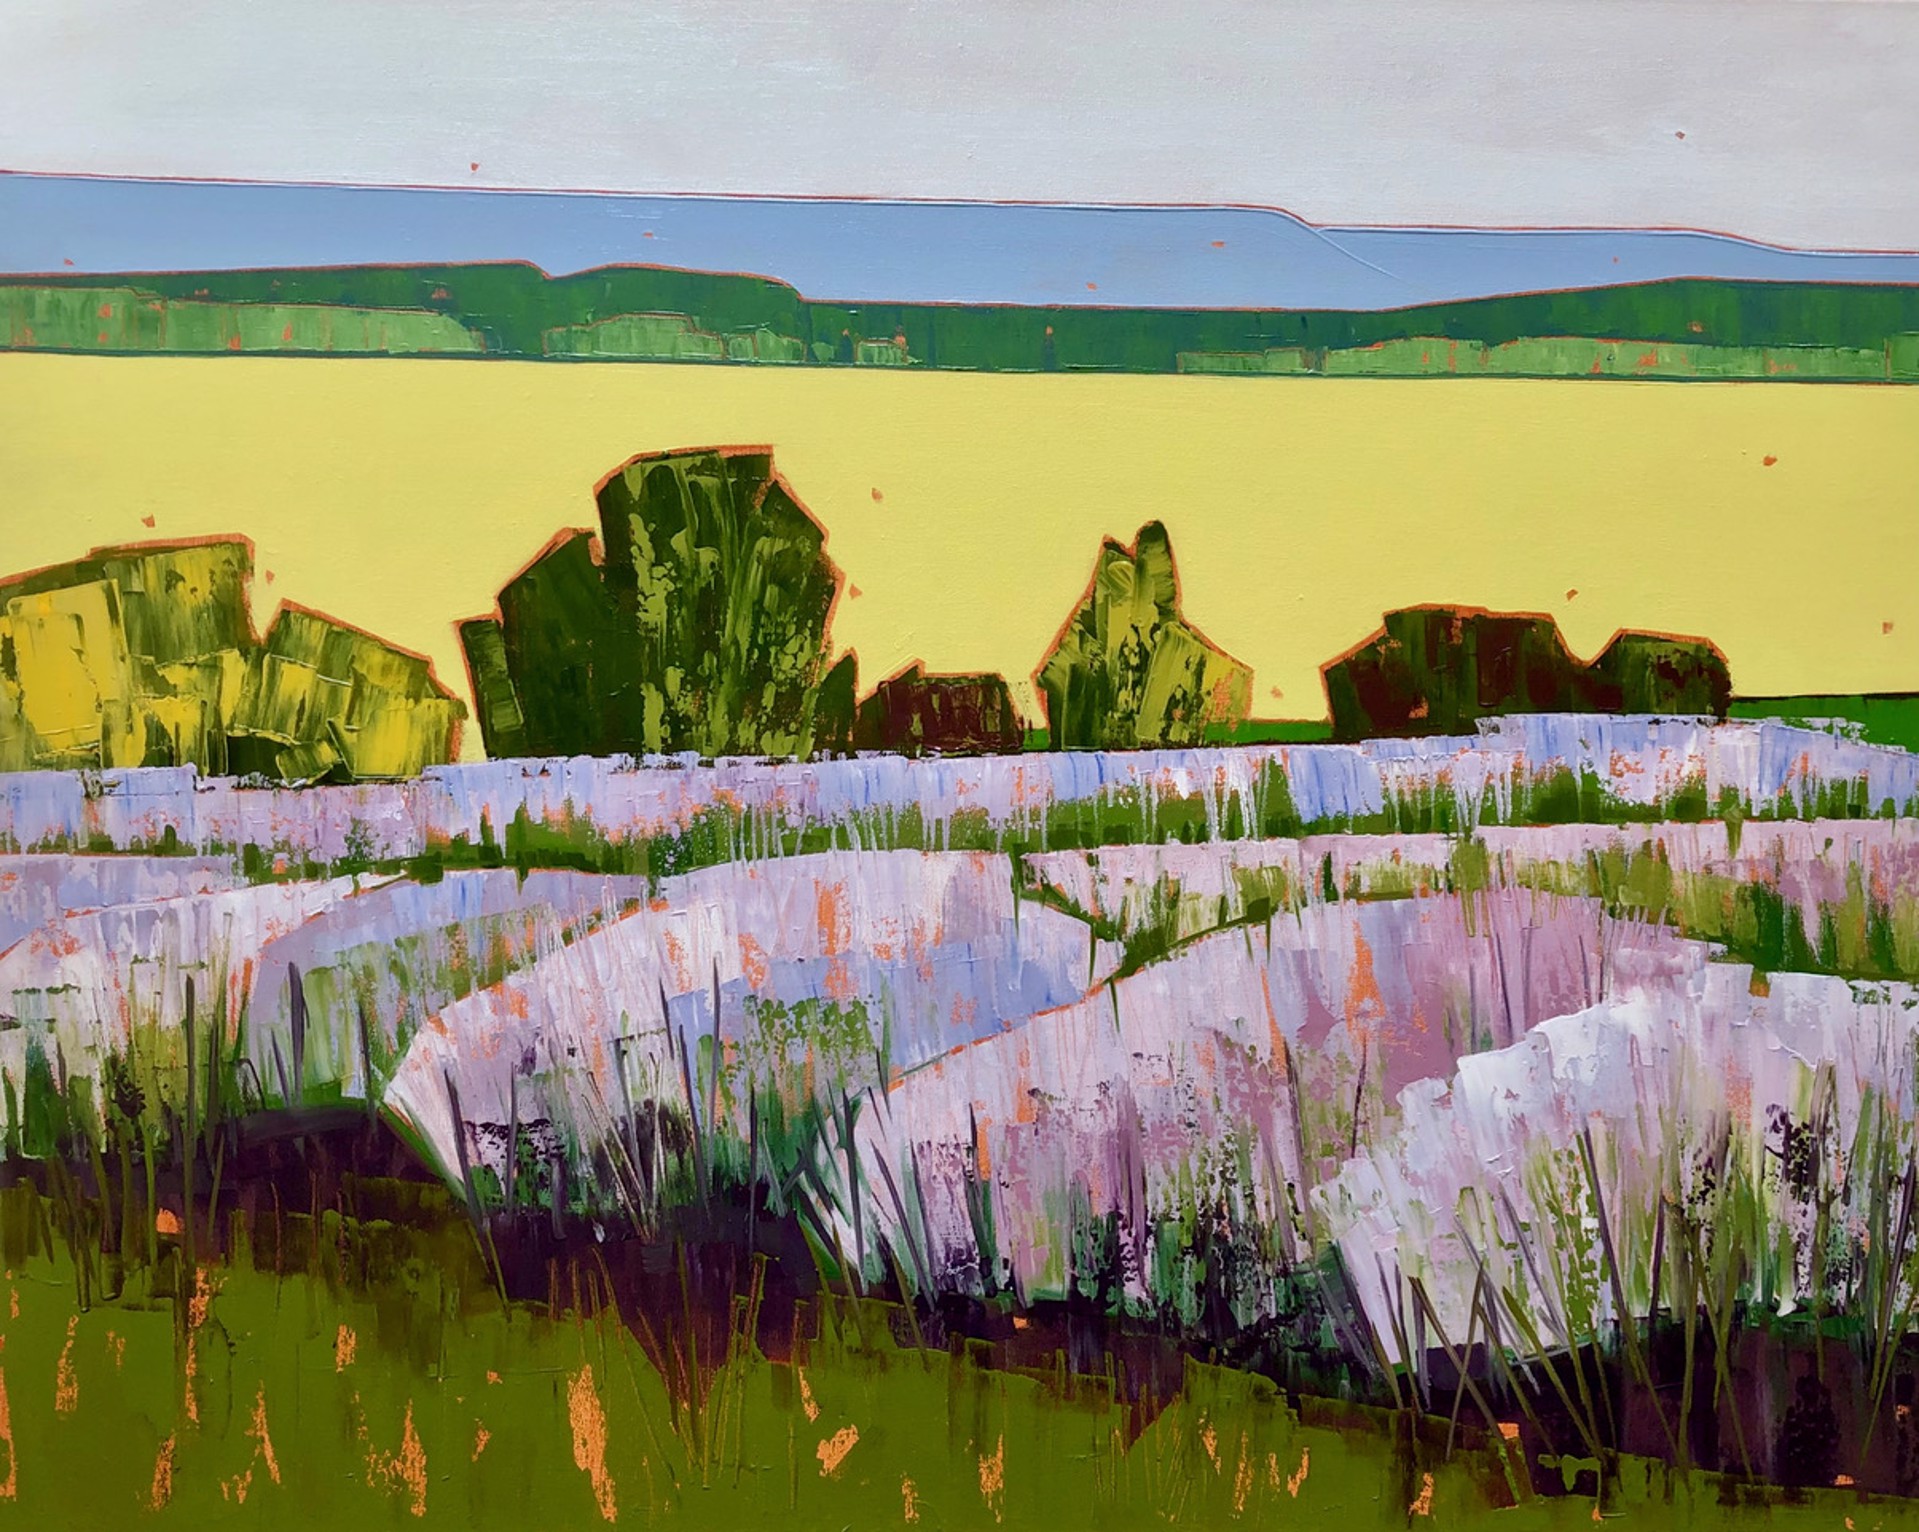 Sunday Lavender by Sarah Gayle Carter